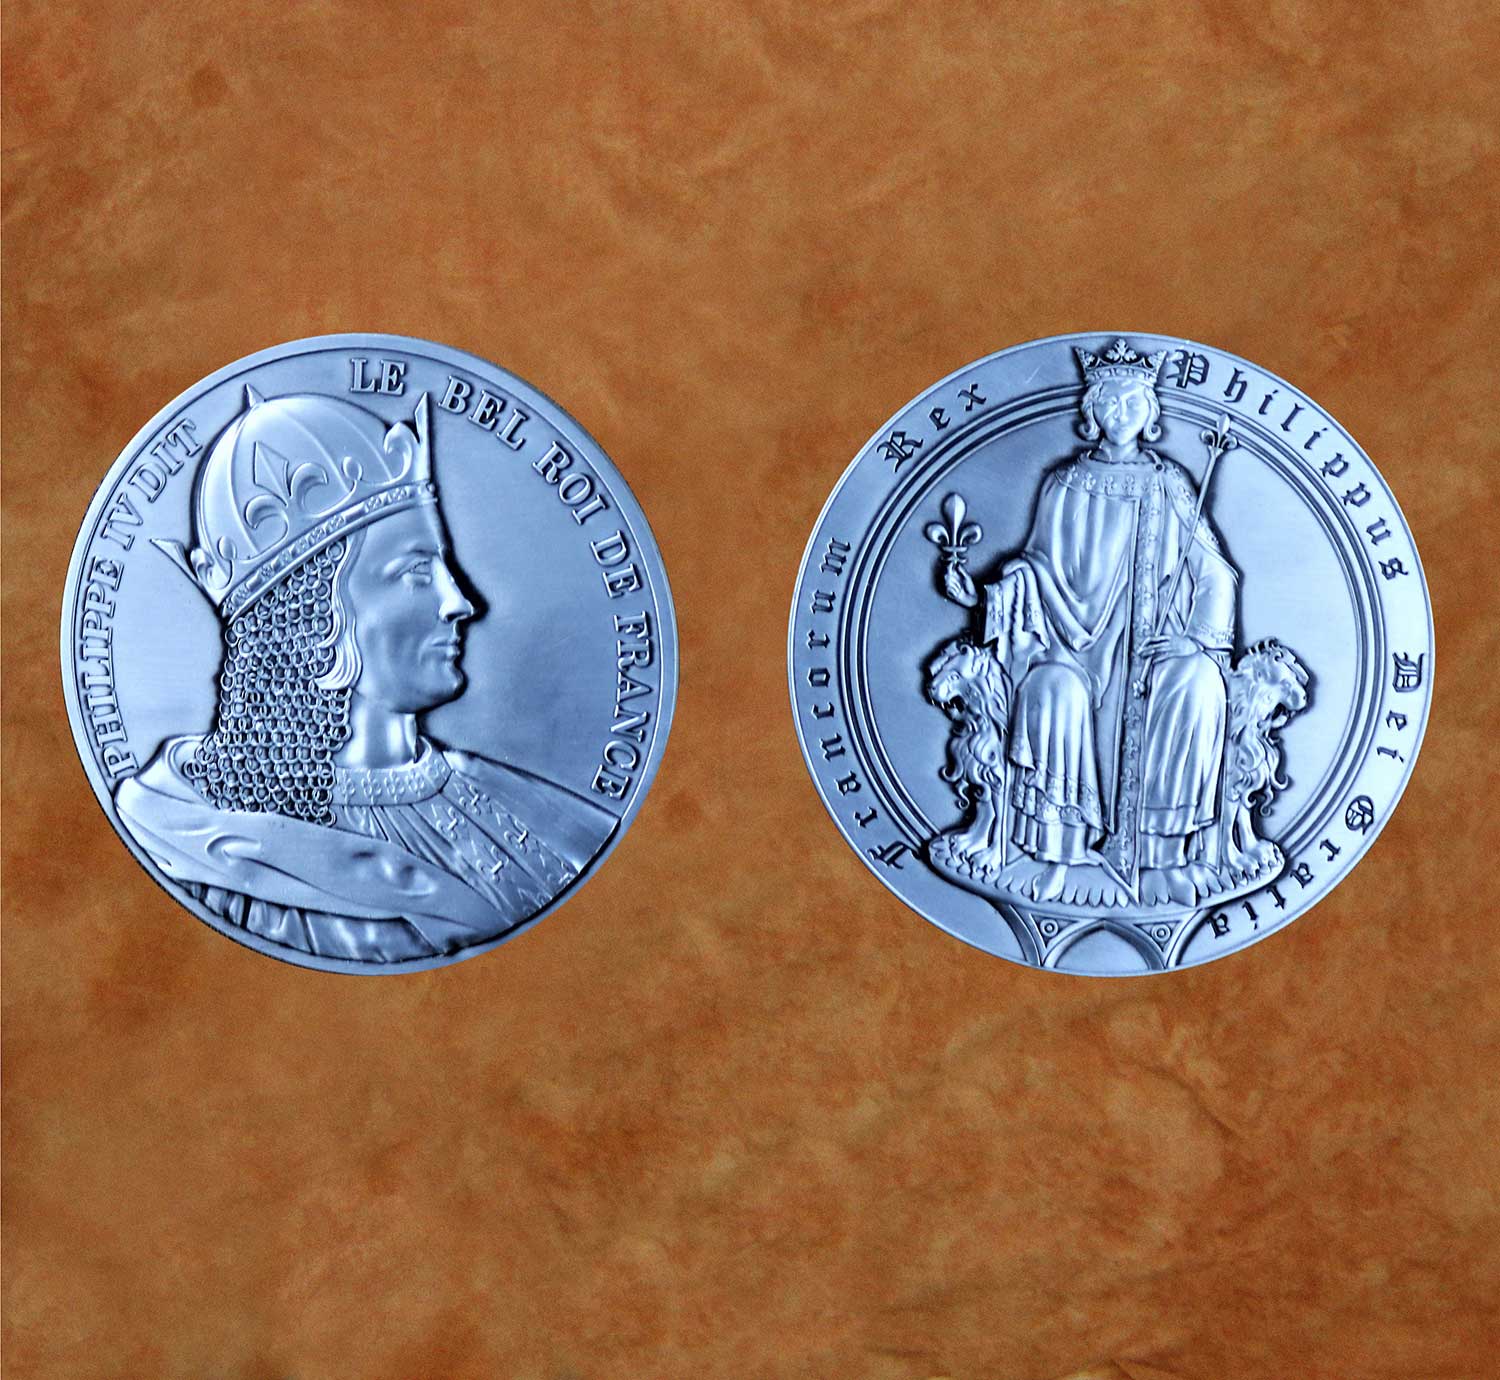 France Mint - Obole \u00e0 l'O rond Dy 224 var besant under the O King PHILIPPE IV the BEL 1285-1314 Rare!